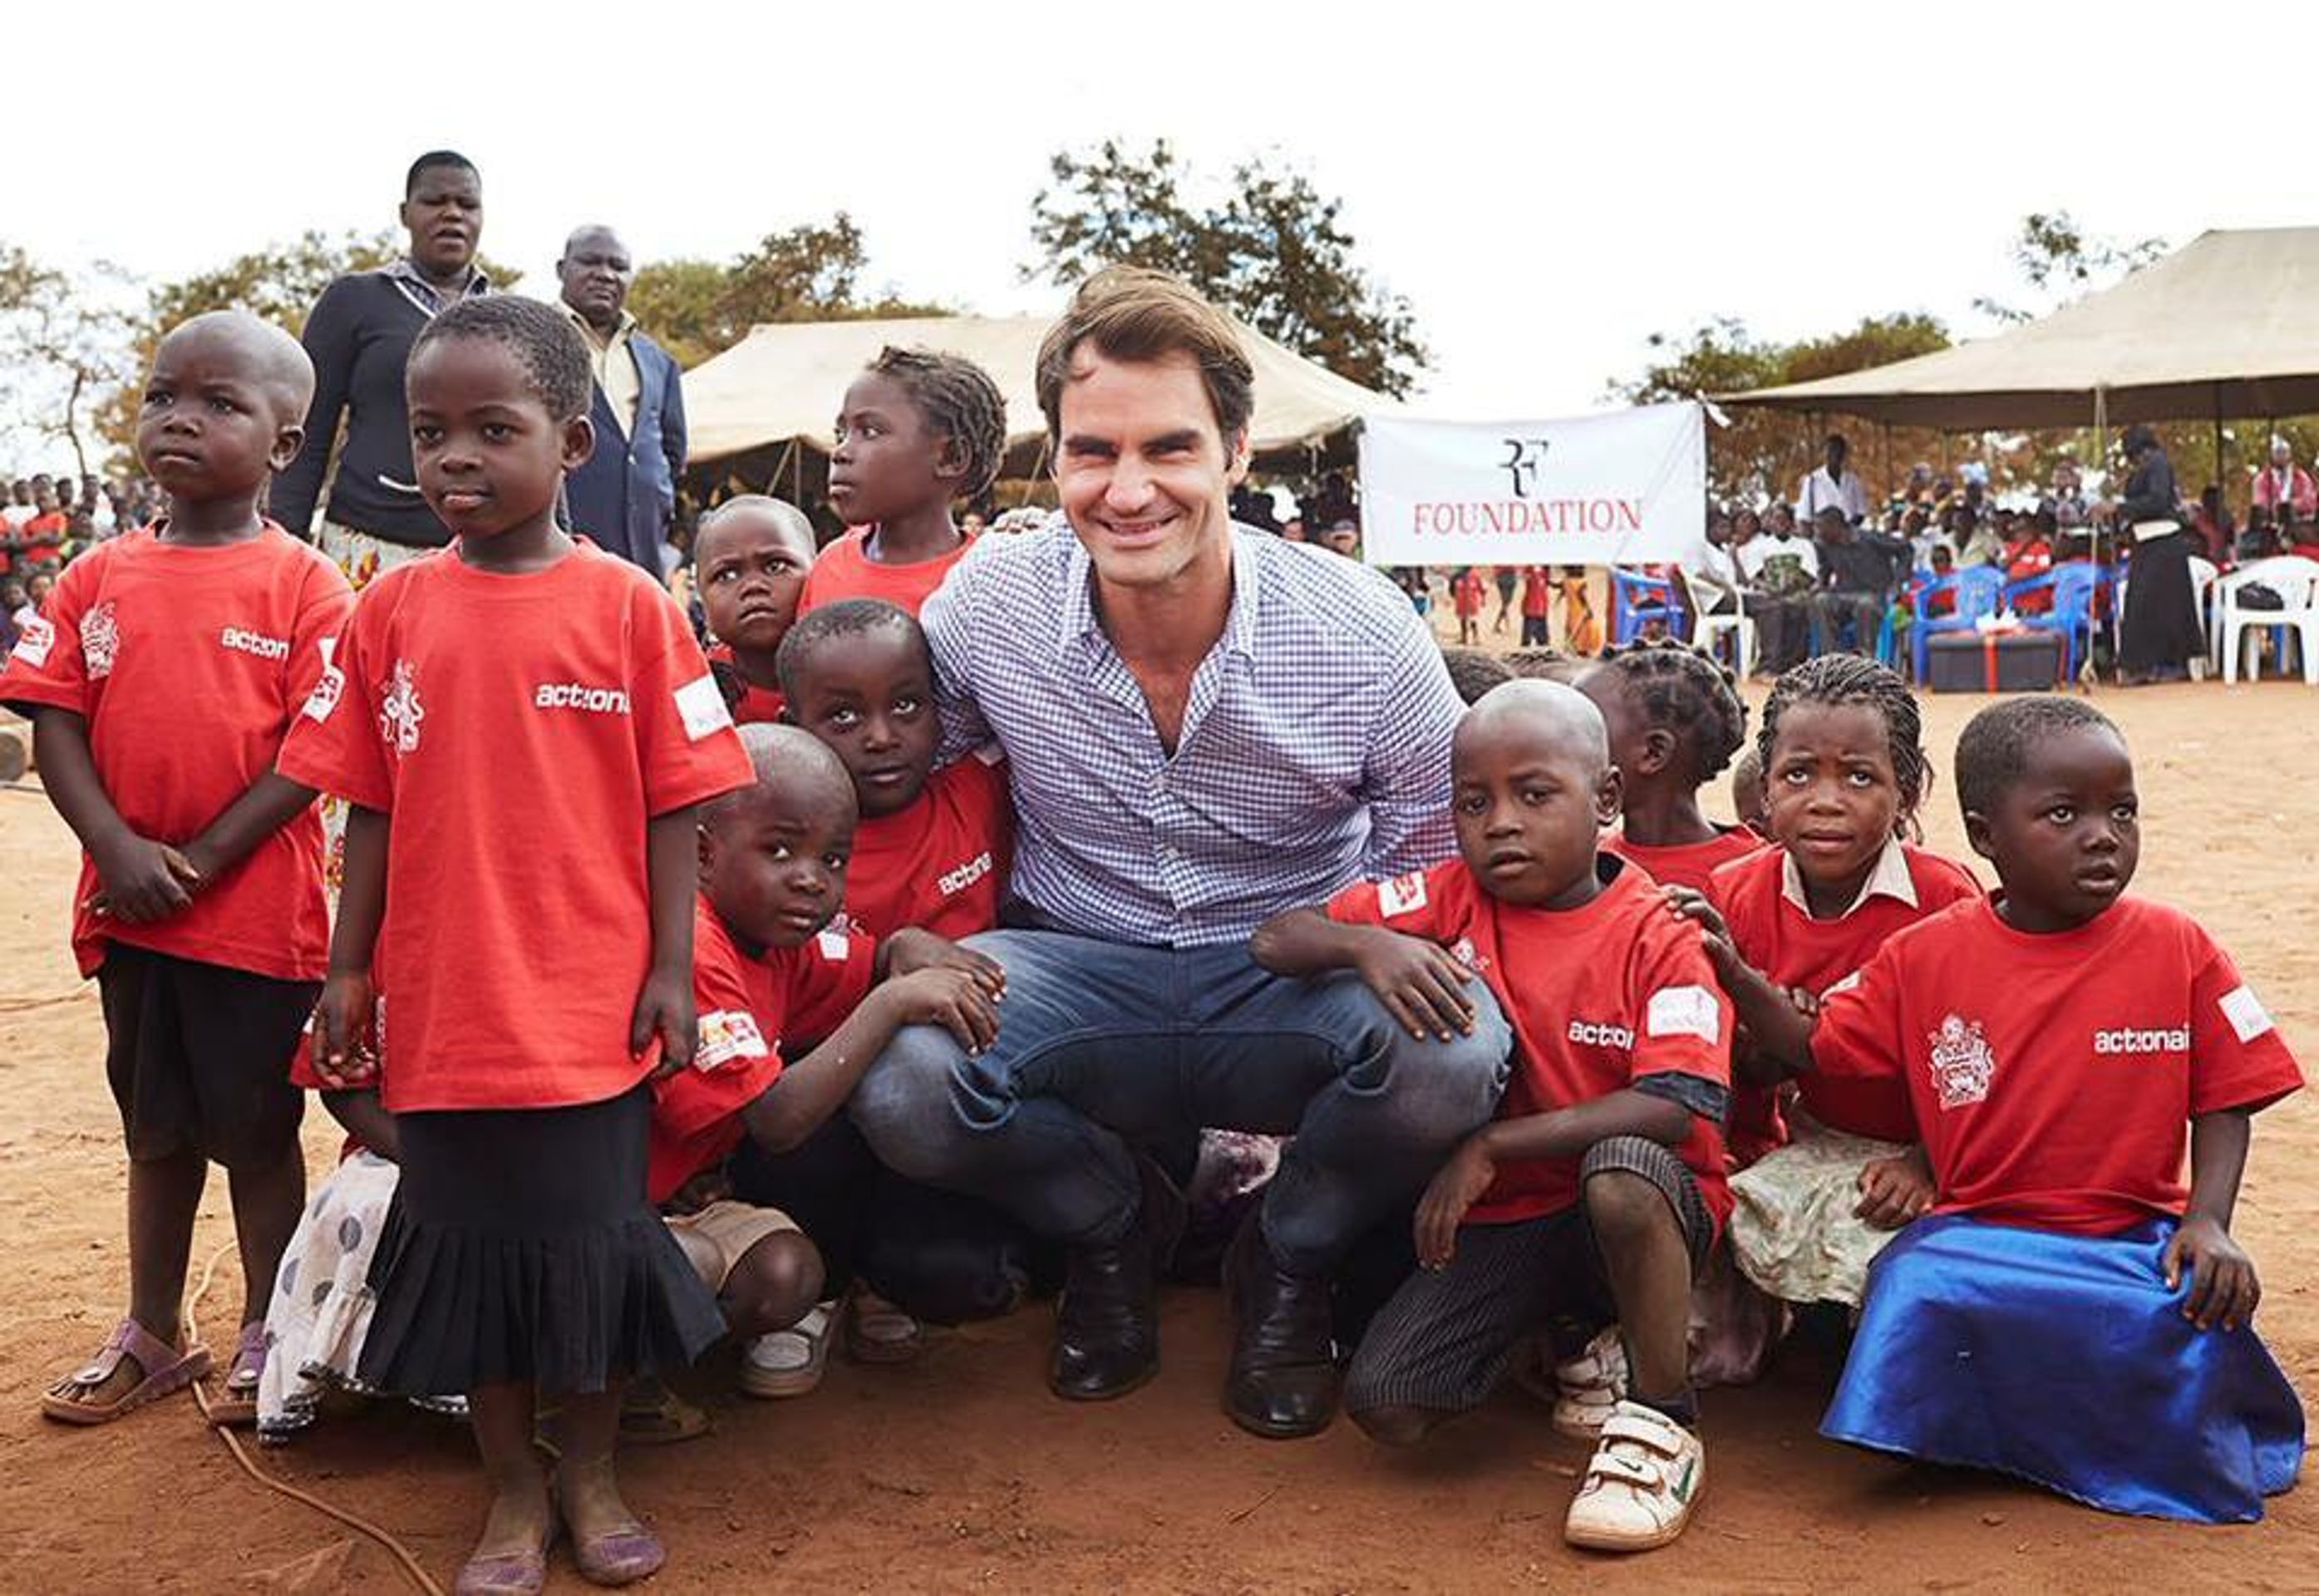 Roger Federer pomáhá dětem v Africe 2 - Galerie: Roger Federer pomáhá dětem v Africe (5/5)